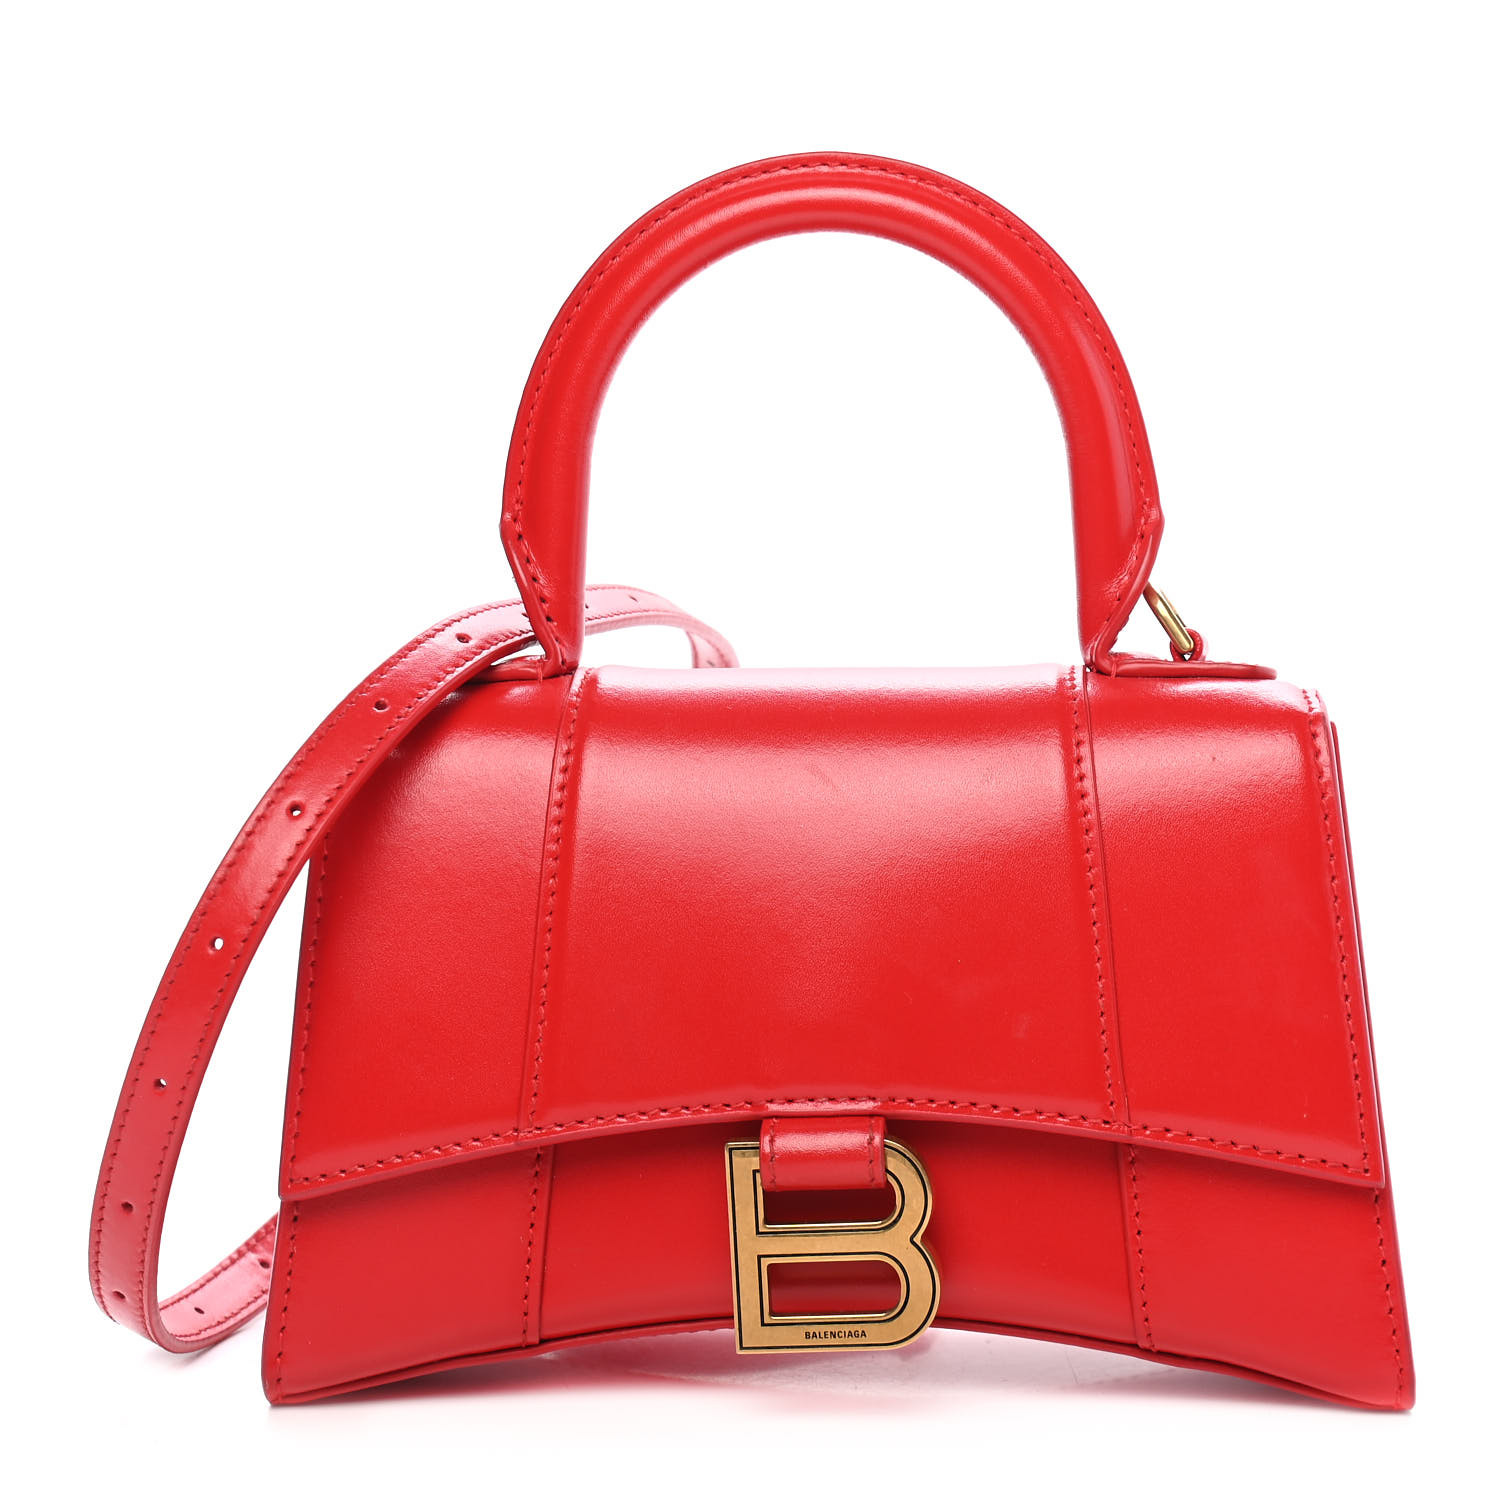 An Expert Names 5 Handbags That Retain Their Resale Value | Who What Wear